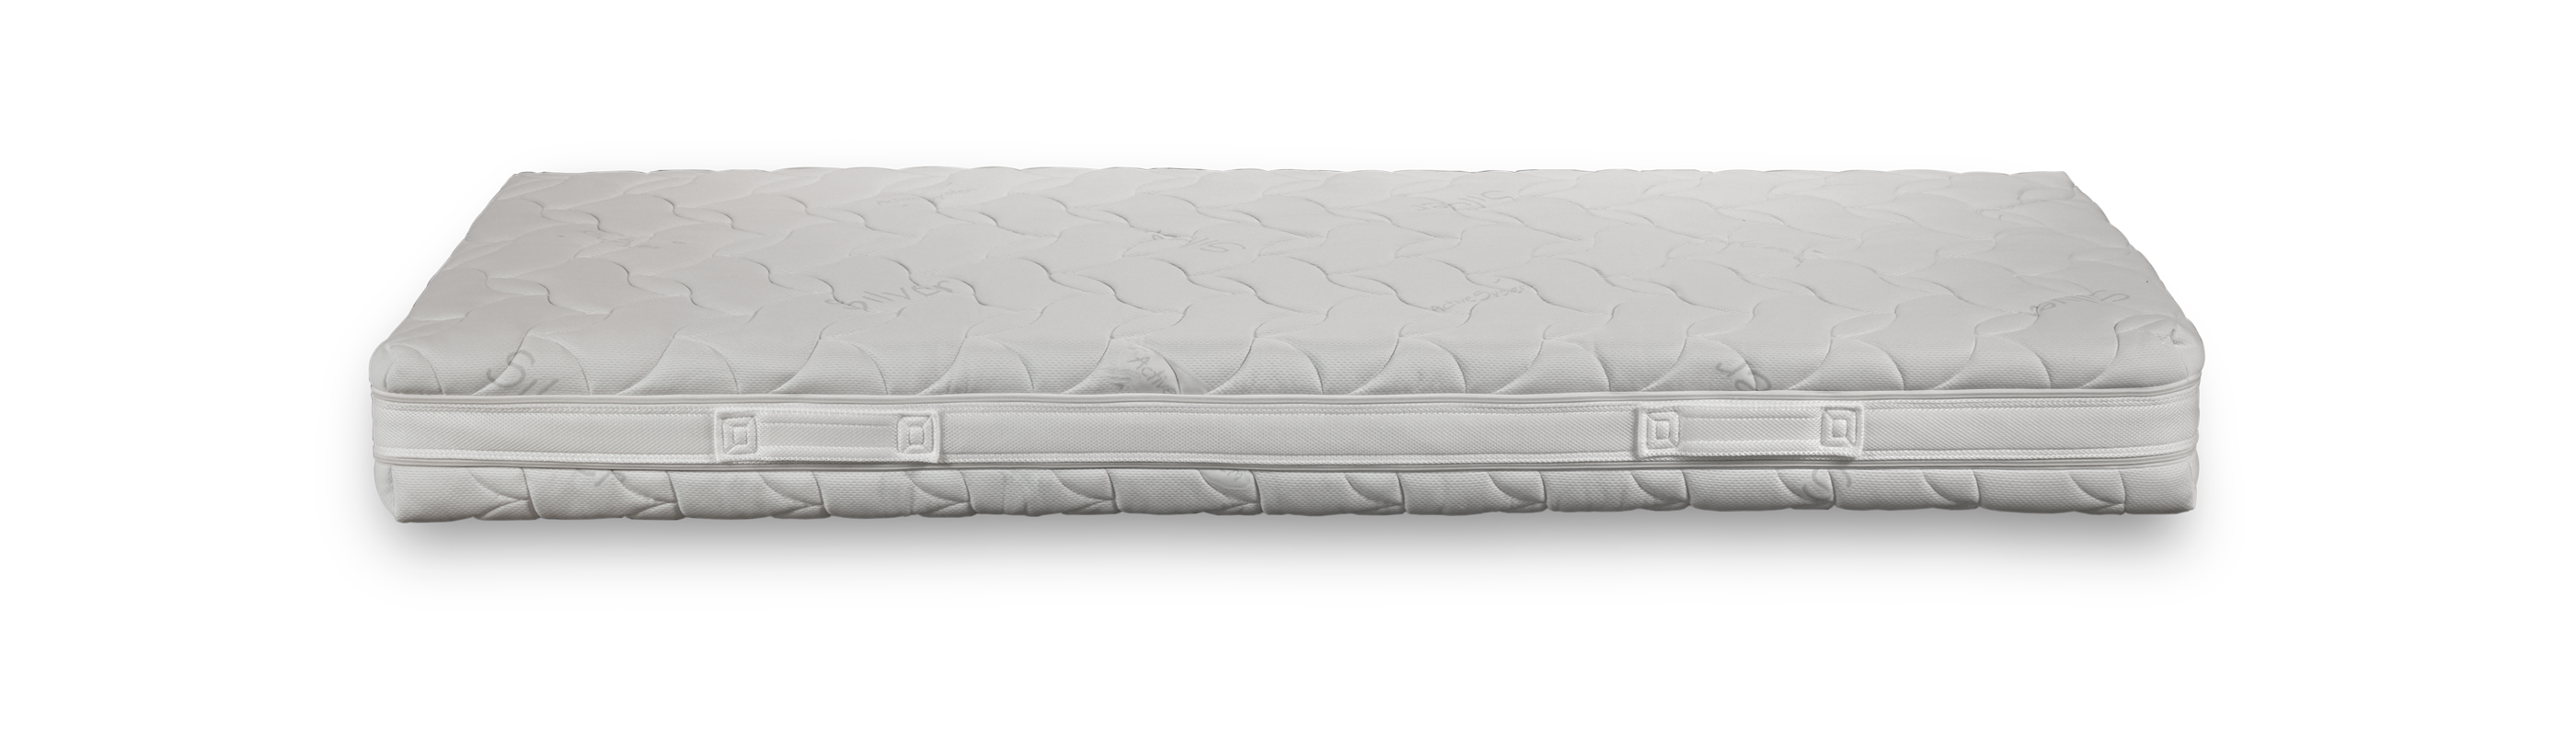 Water-foam mattress | Night & Day